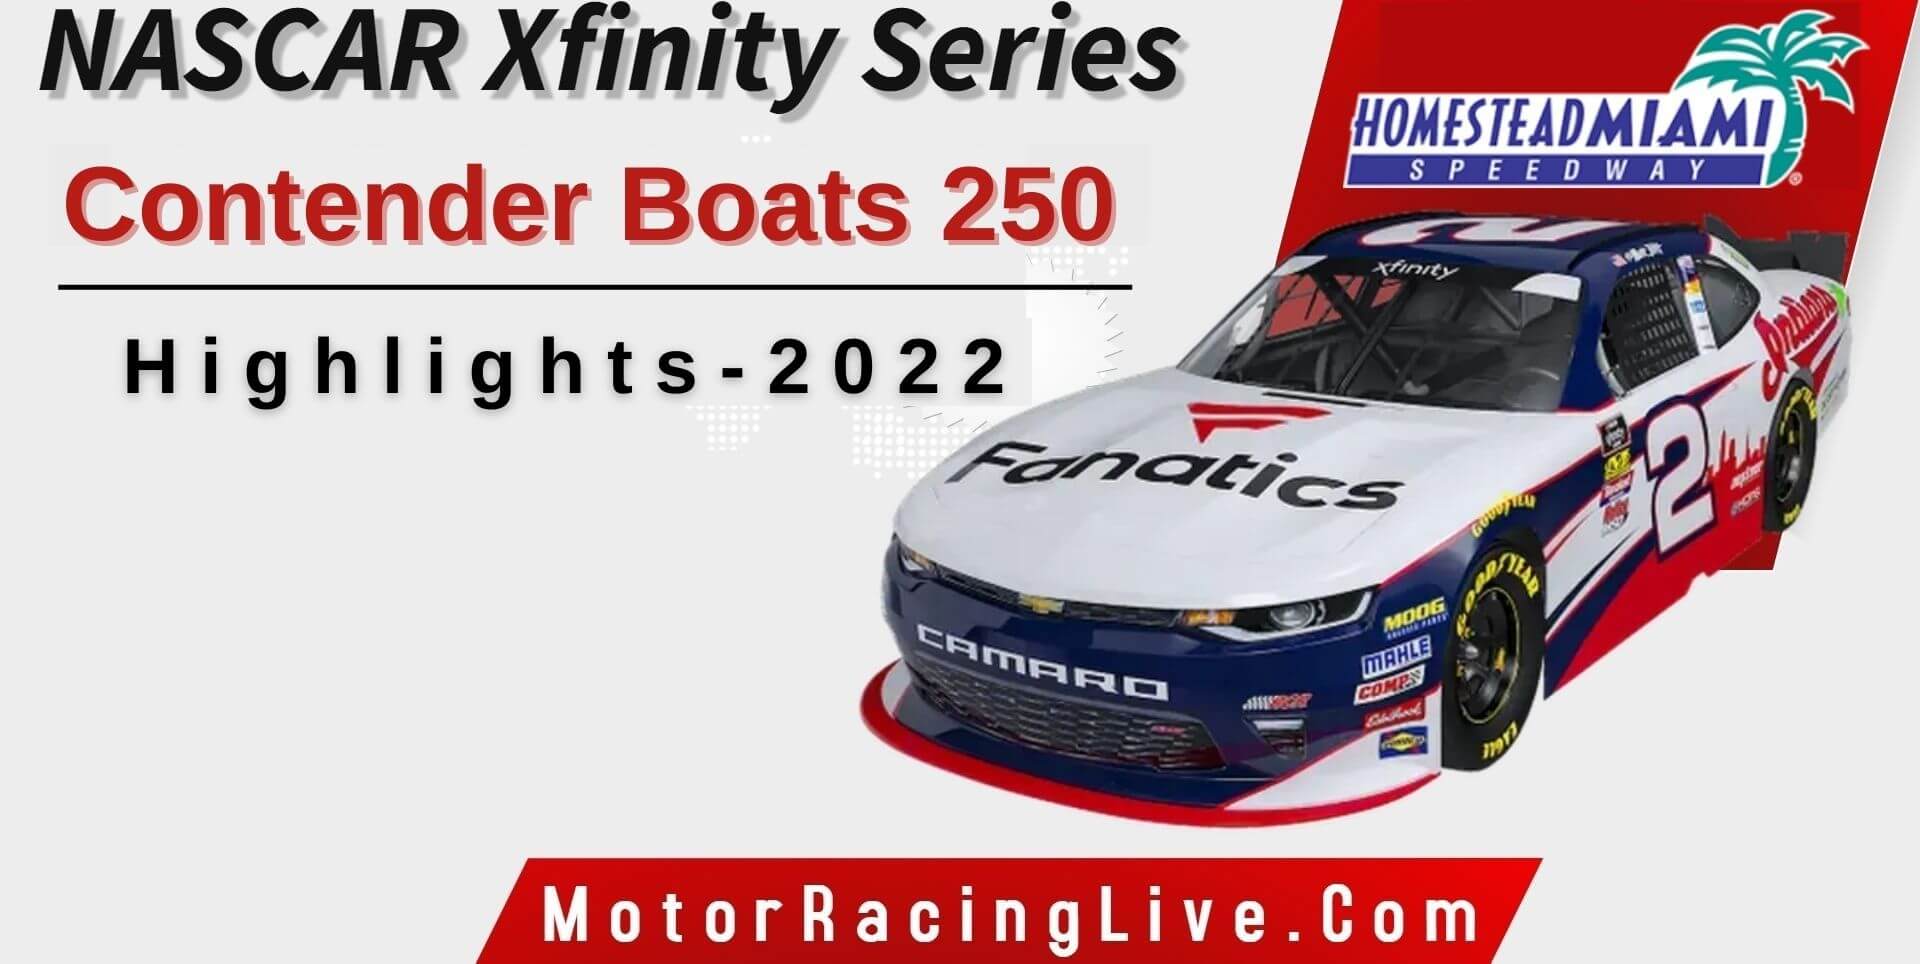 Contender Boats 300 Highlights 2022 NASCAR Xfinity